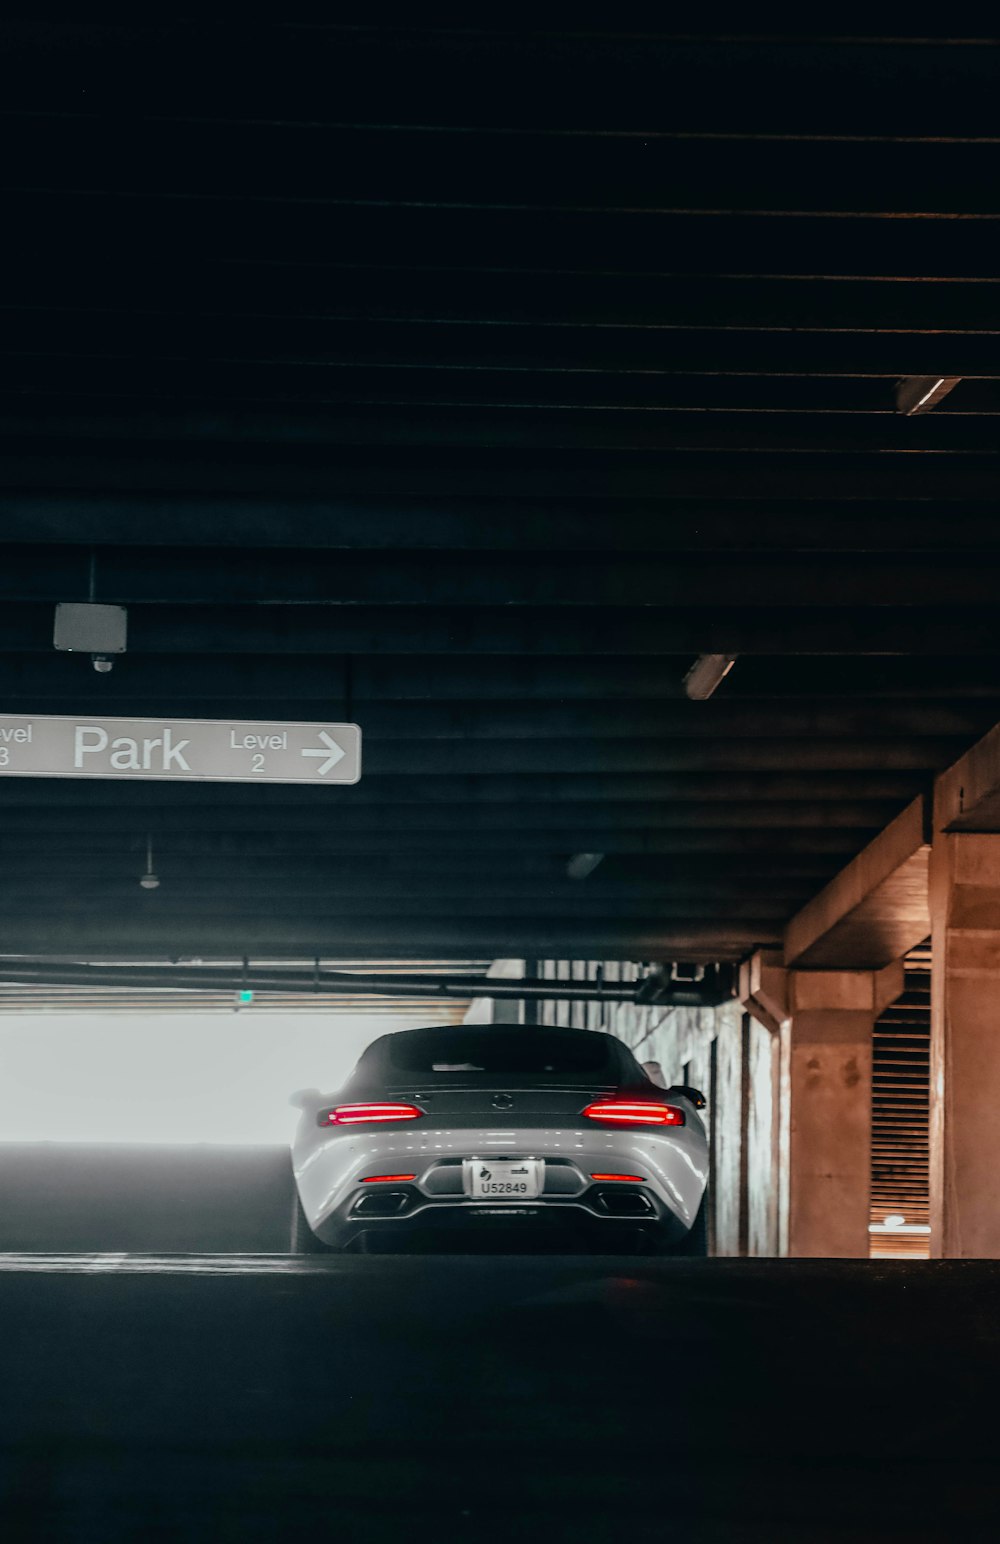 a car is parked in a parking garage